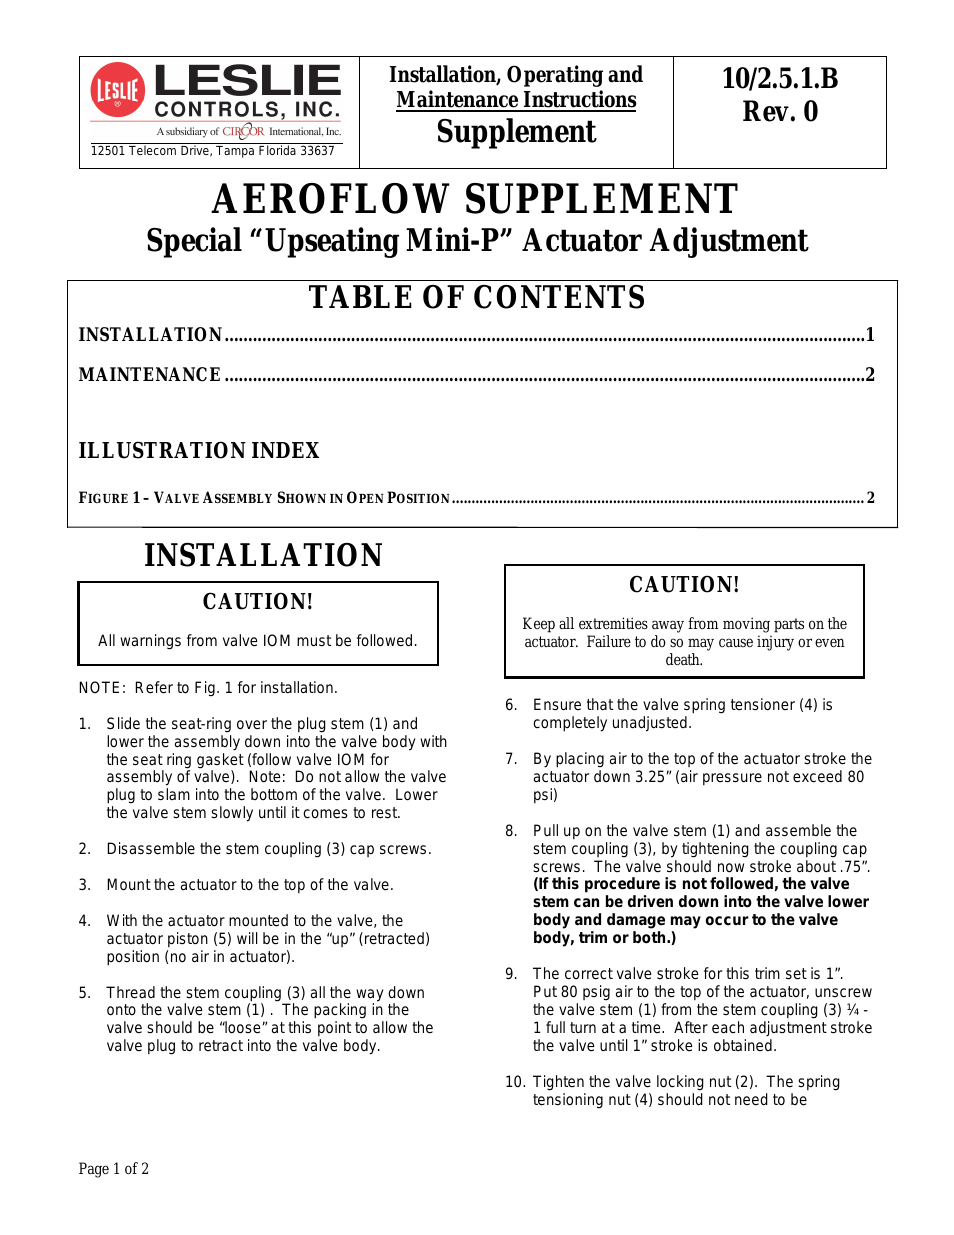 AEROFLOW SUPPLEMENT Special Upseating Mini-P FTC Actuator Adjustment